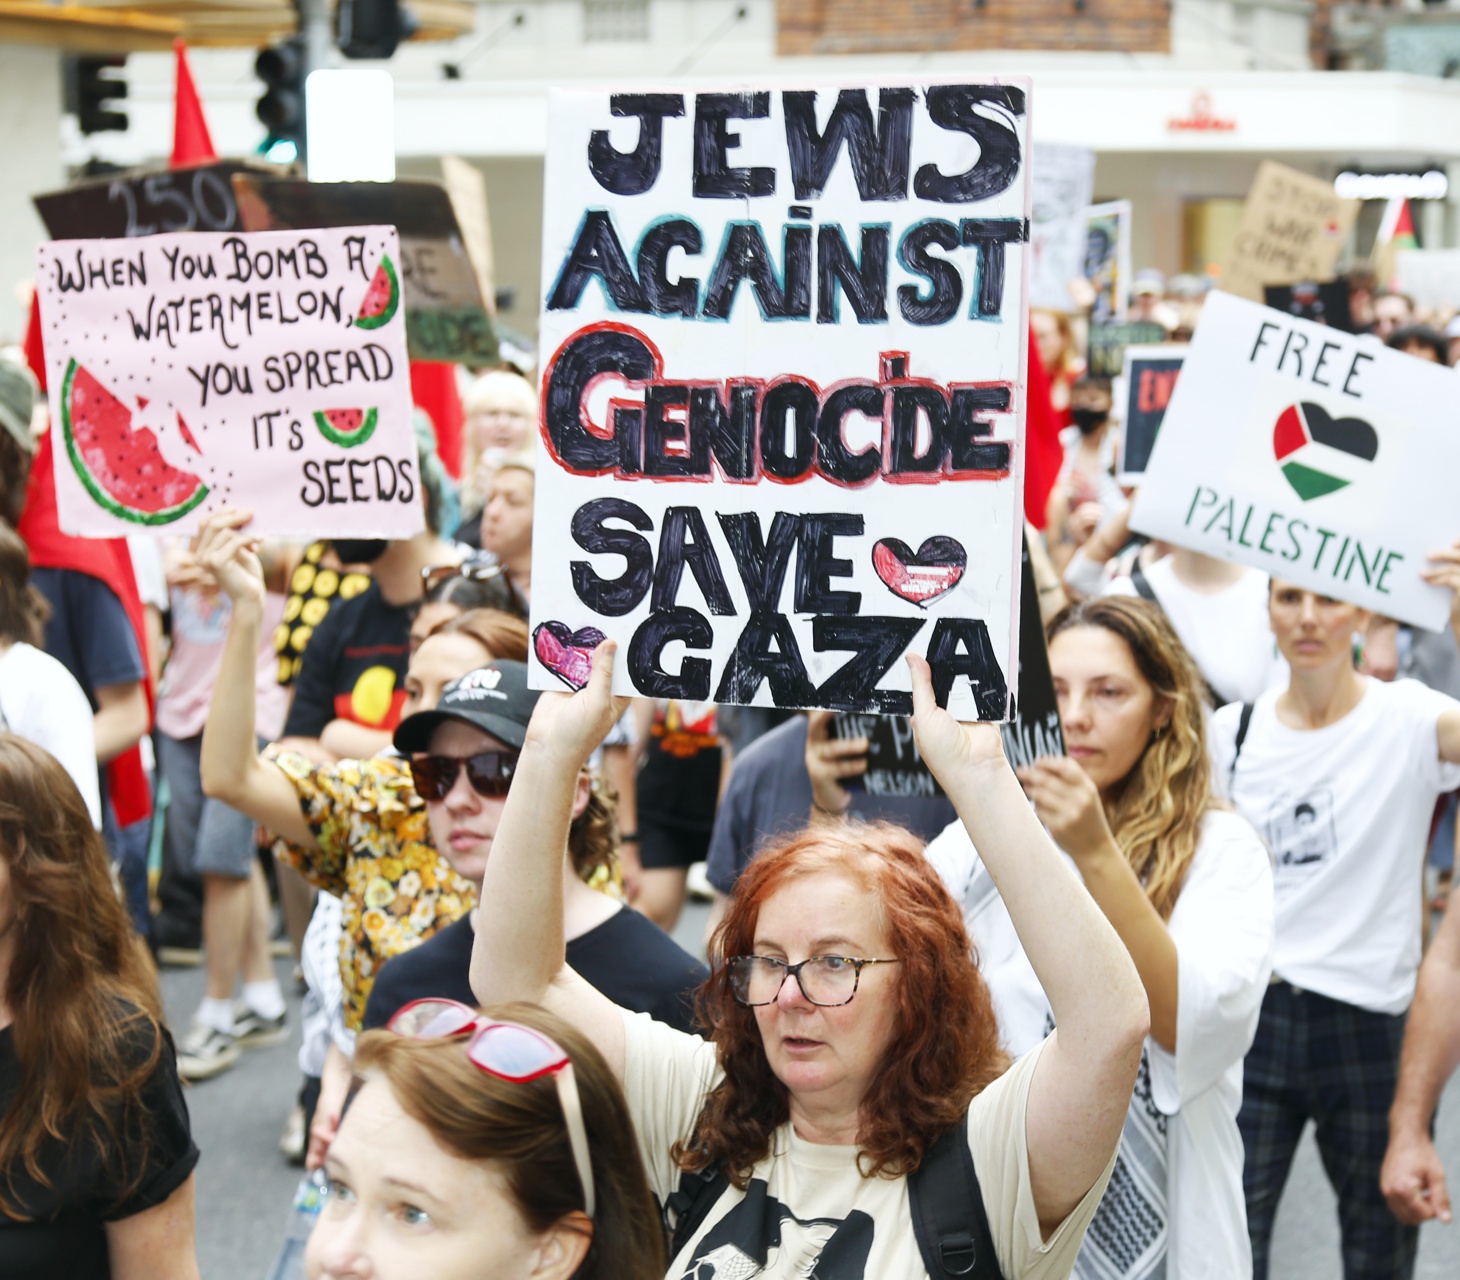 Jews against genocide, Magan-djin/Brisbane, April 7